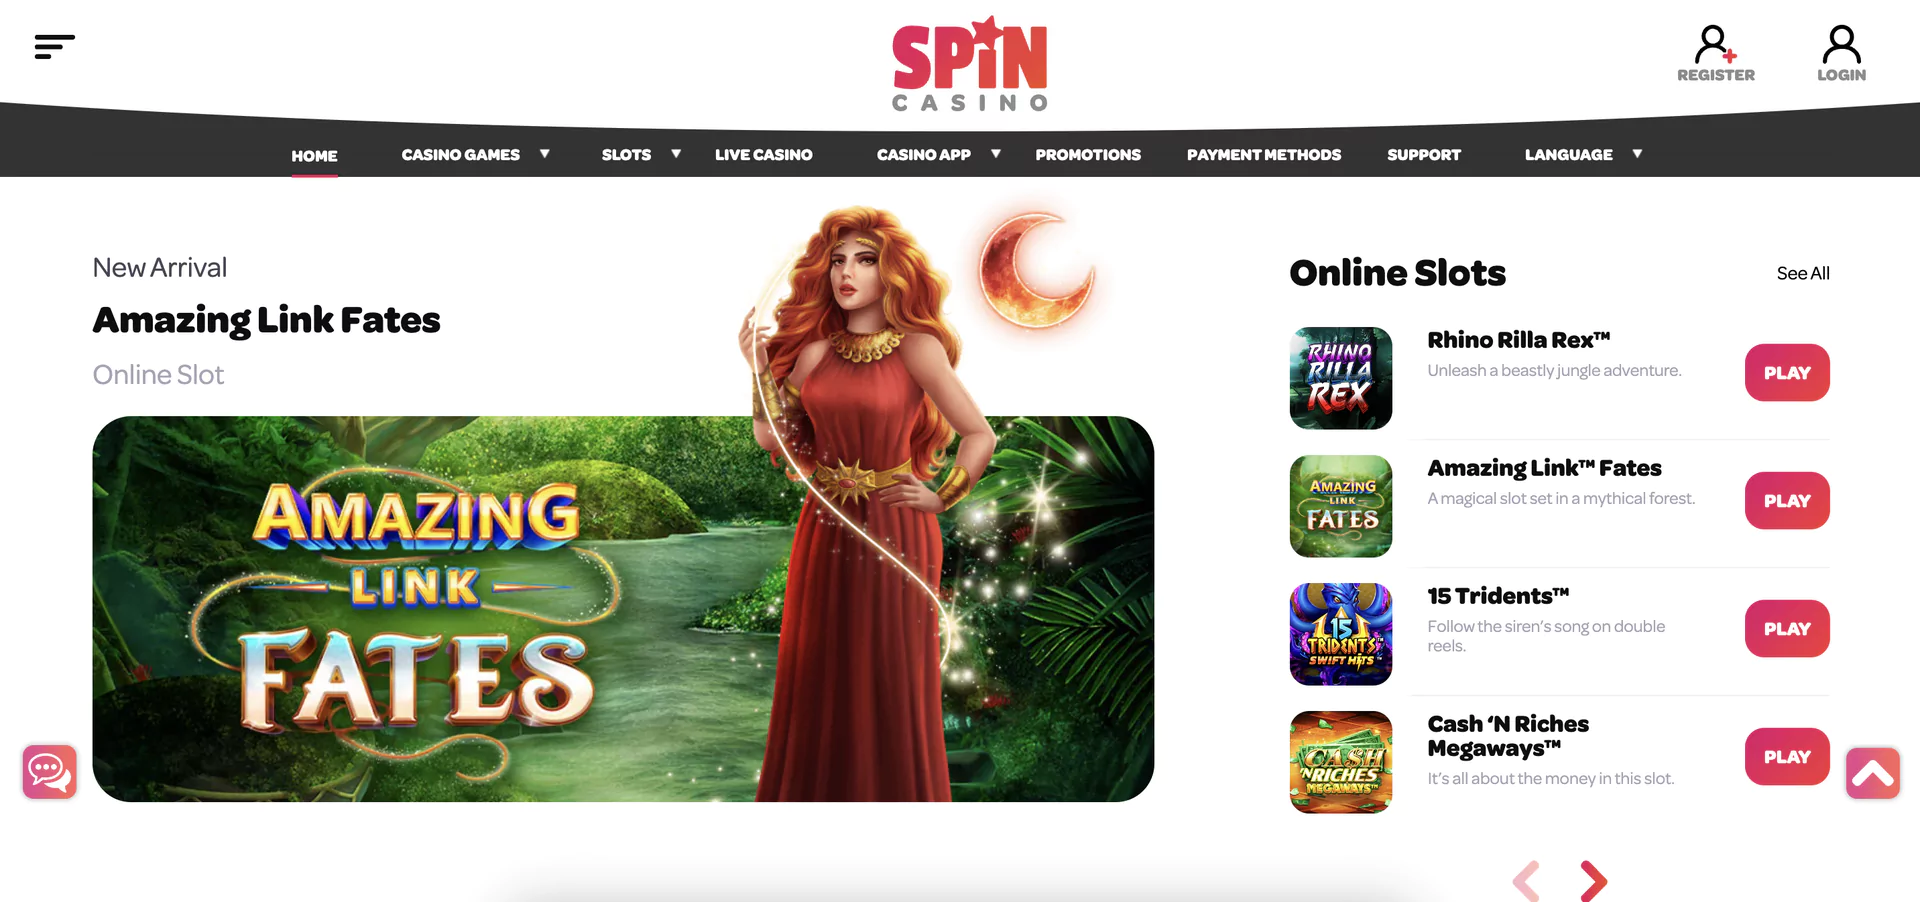 Main page at Spin Casino